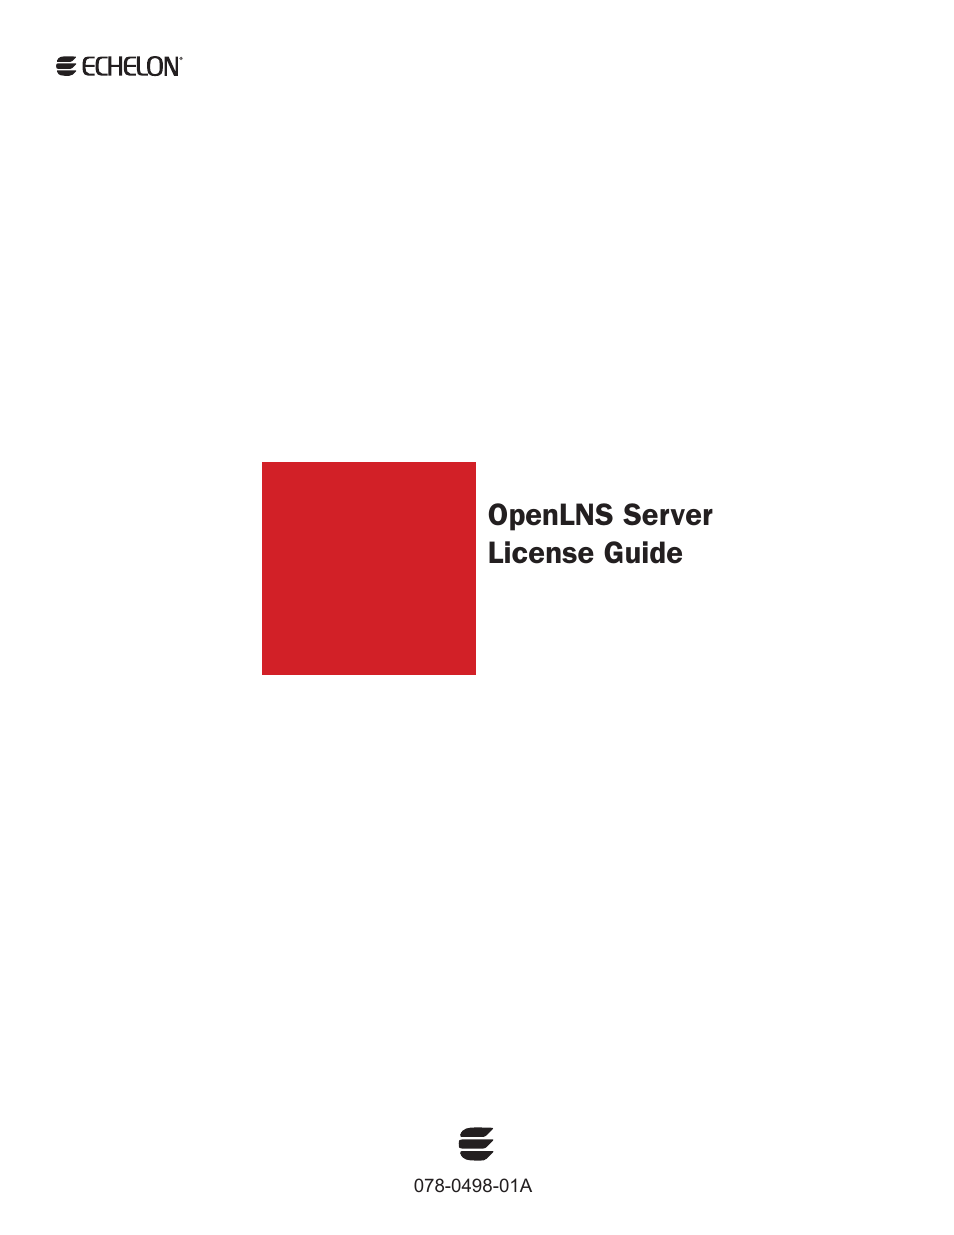 OpenLNS Server License